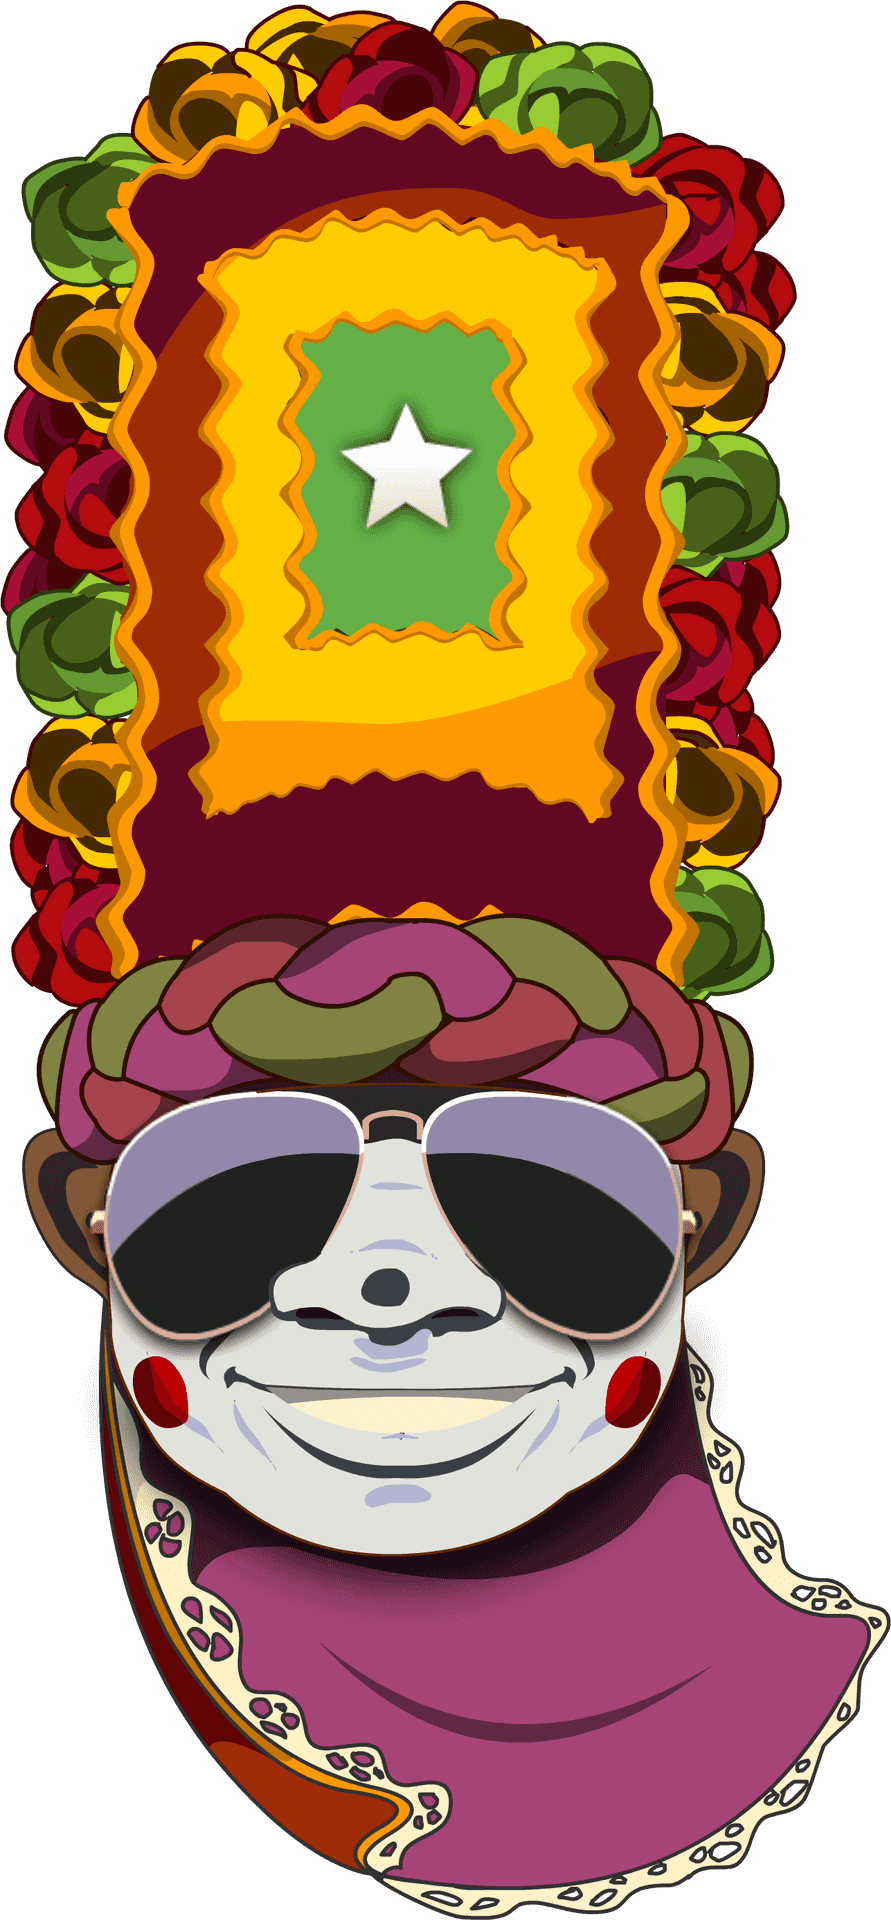 Colorful African Mask Illustration PNG image